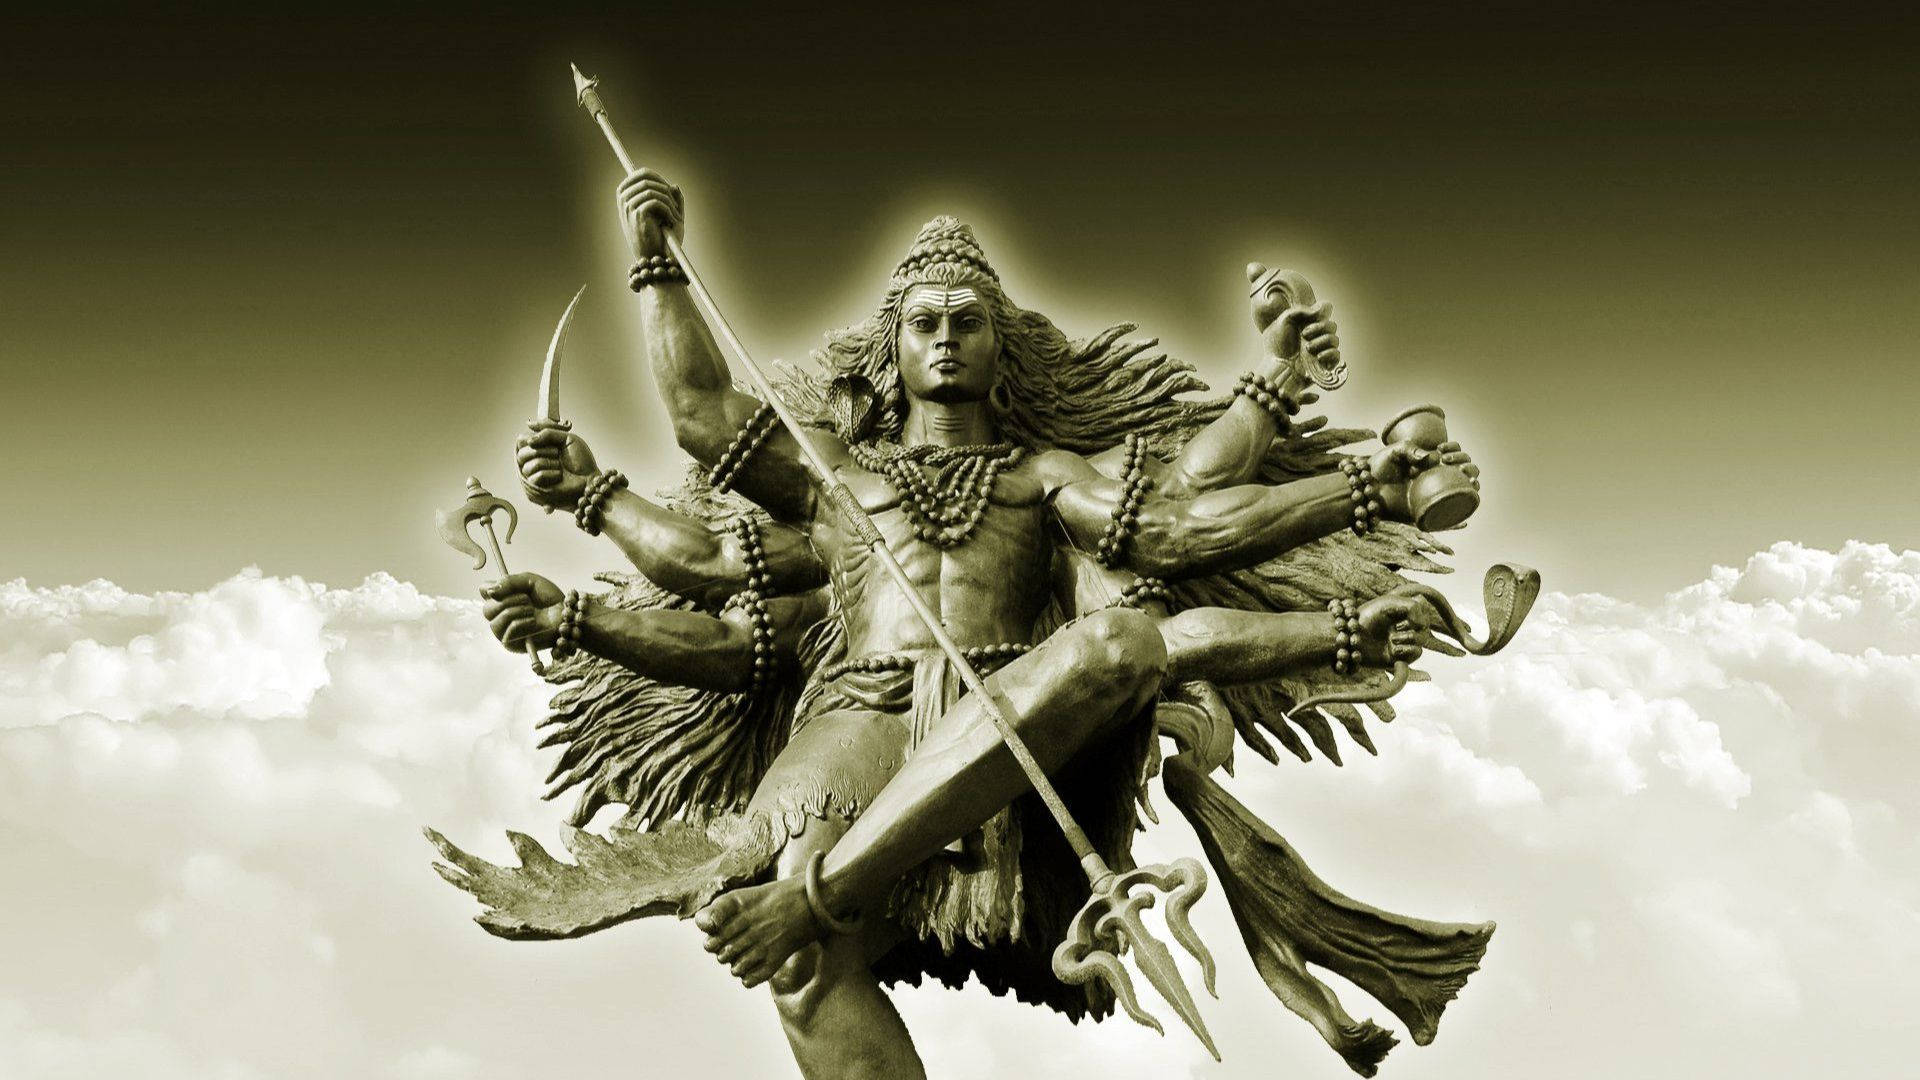 Mahakal Angry Statue Wallpaper